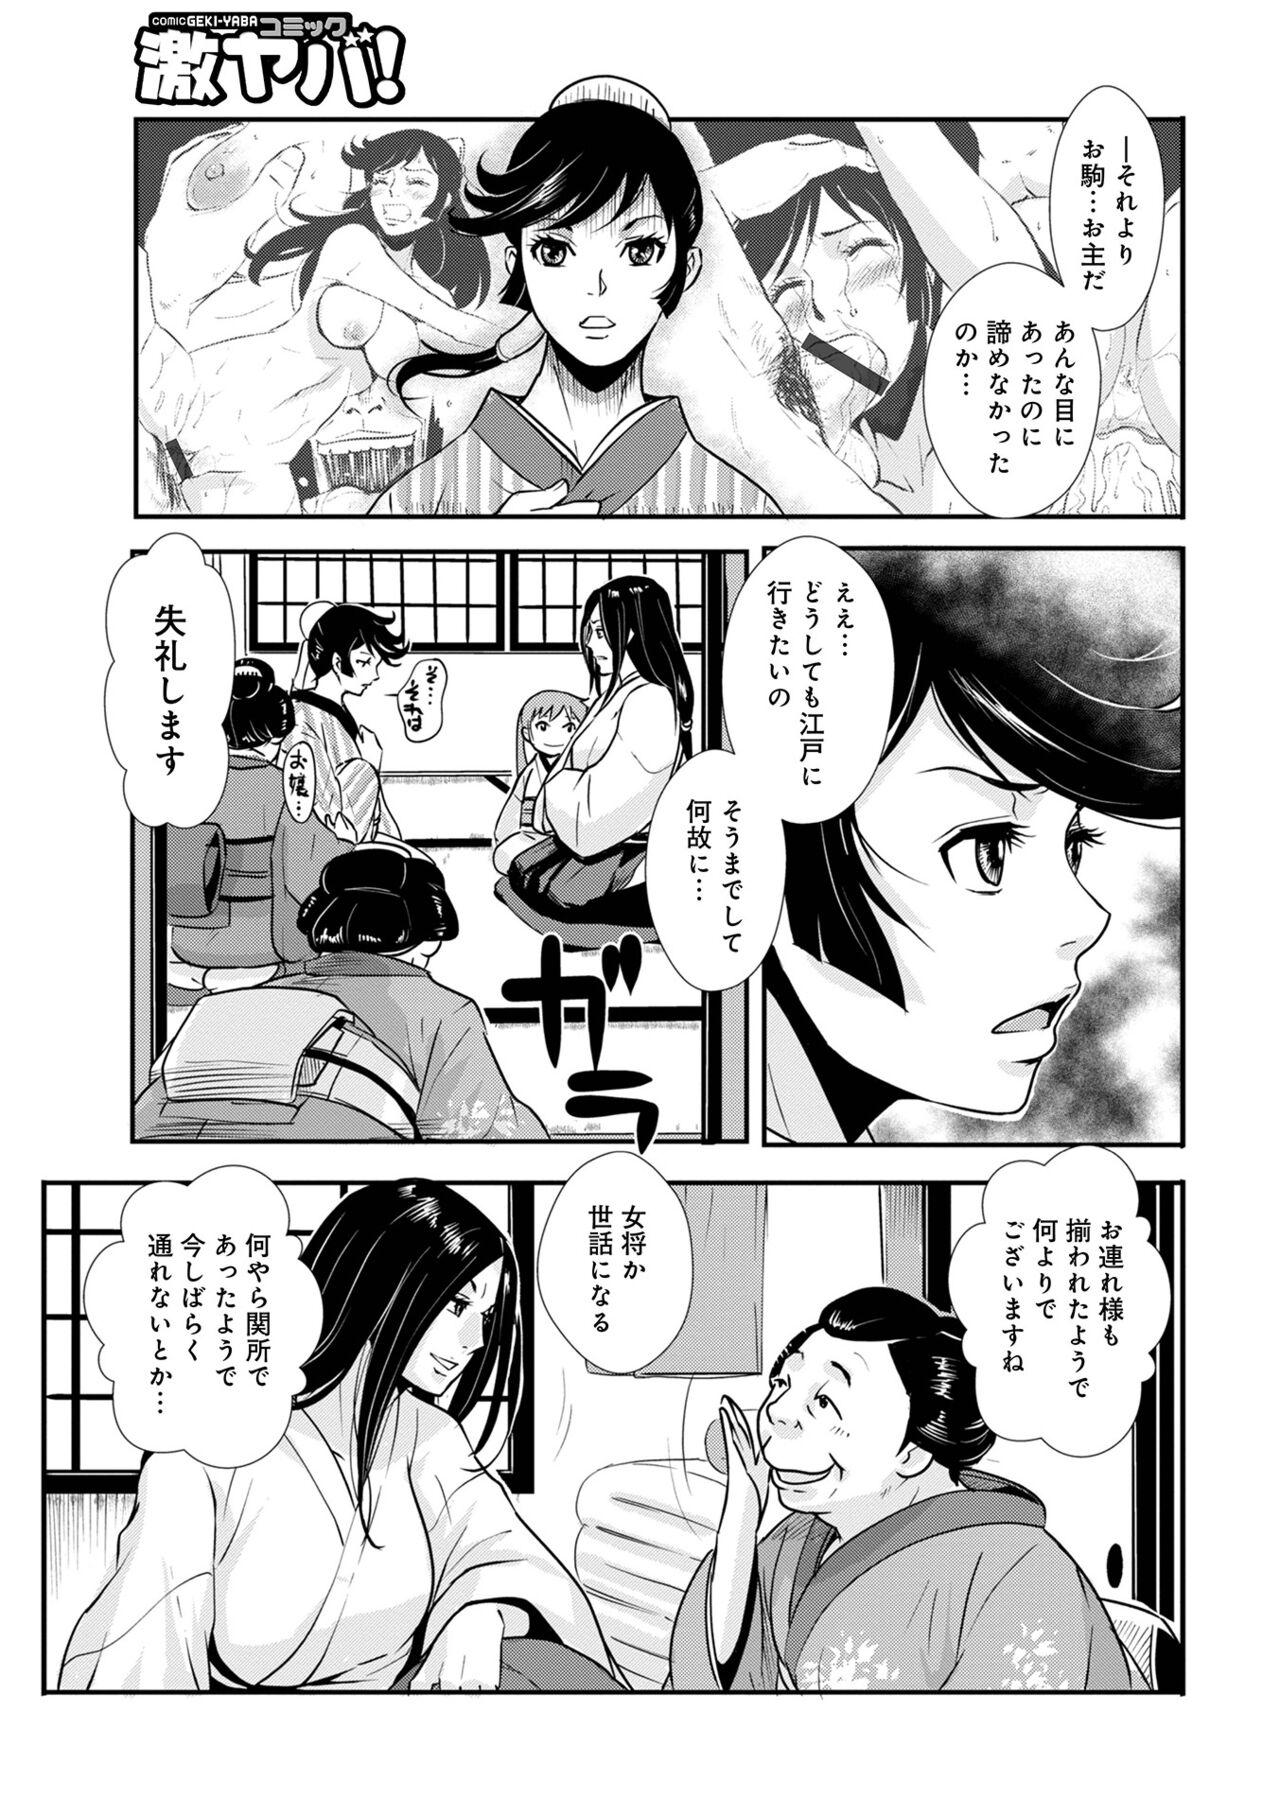 Zorra Harami samurai 14 Safadinha - Page 5